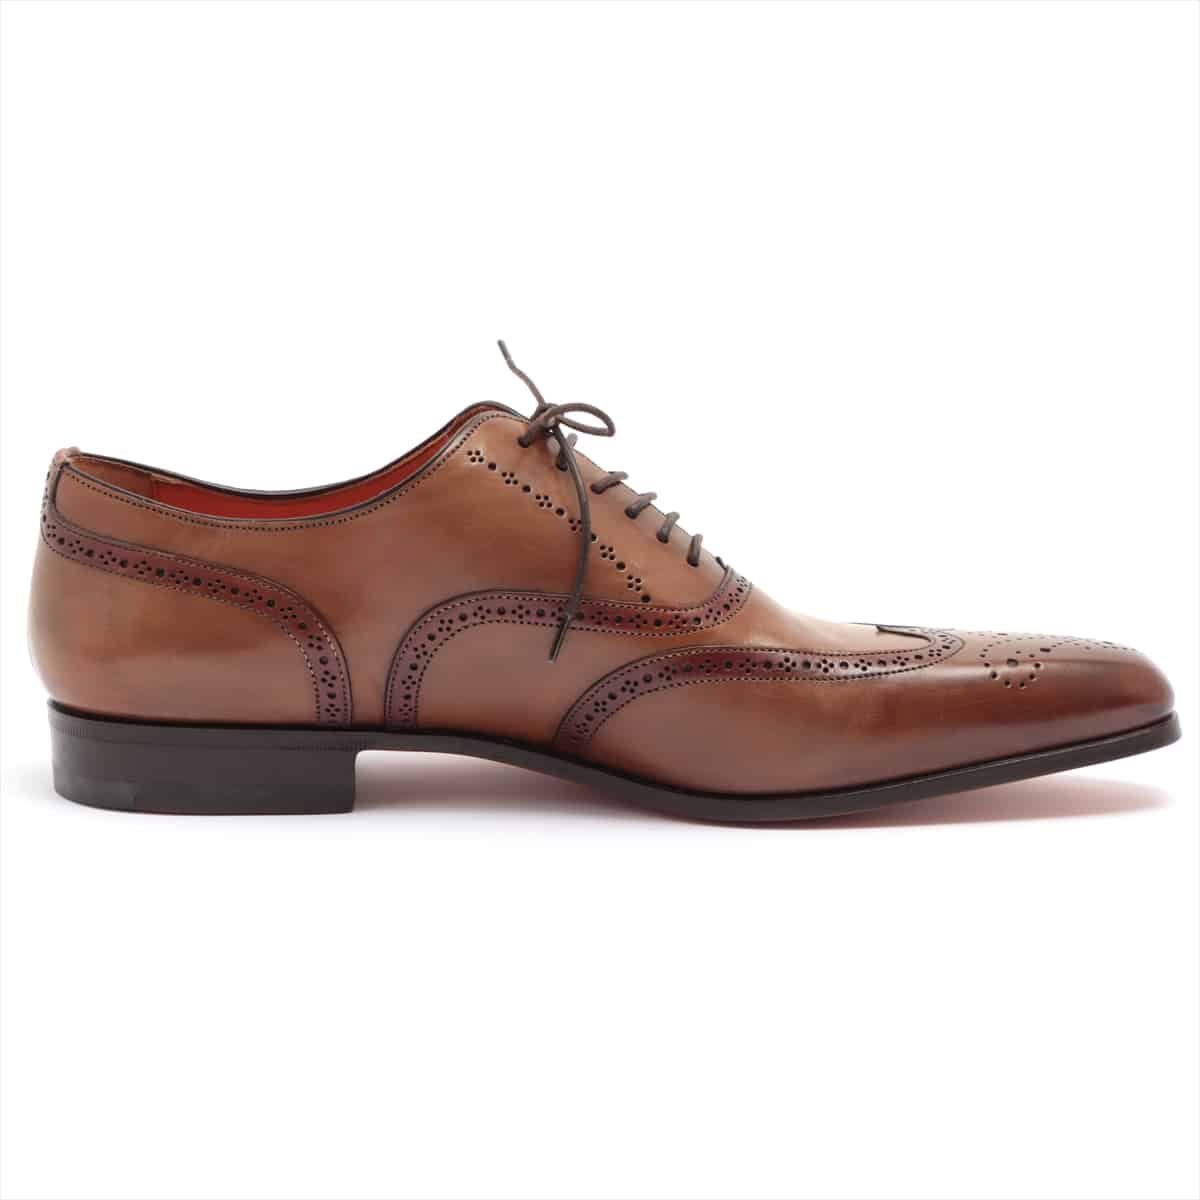 Santoni Leather Leather shoes 8 Men's Brown wingtip